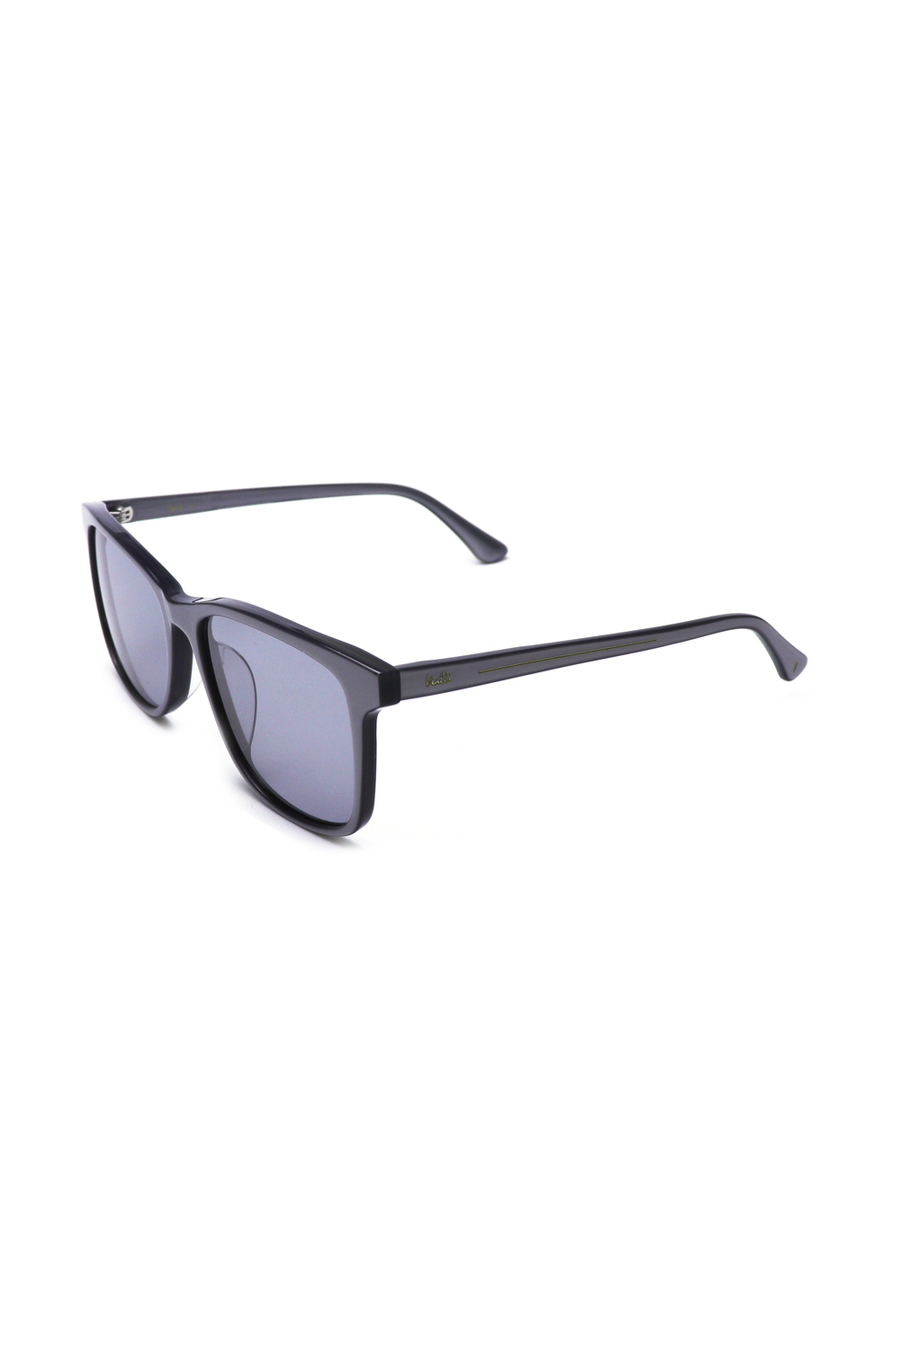 Don Pacino Sunglasses*